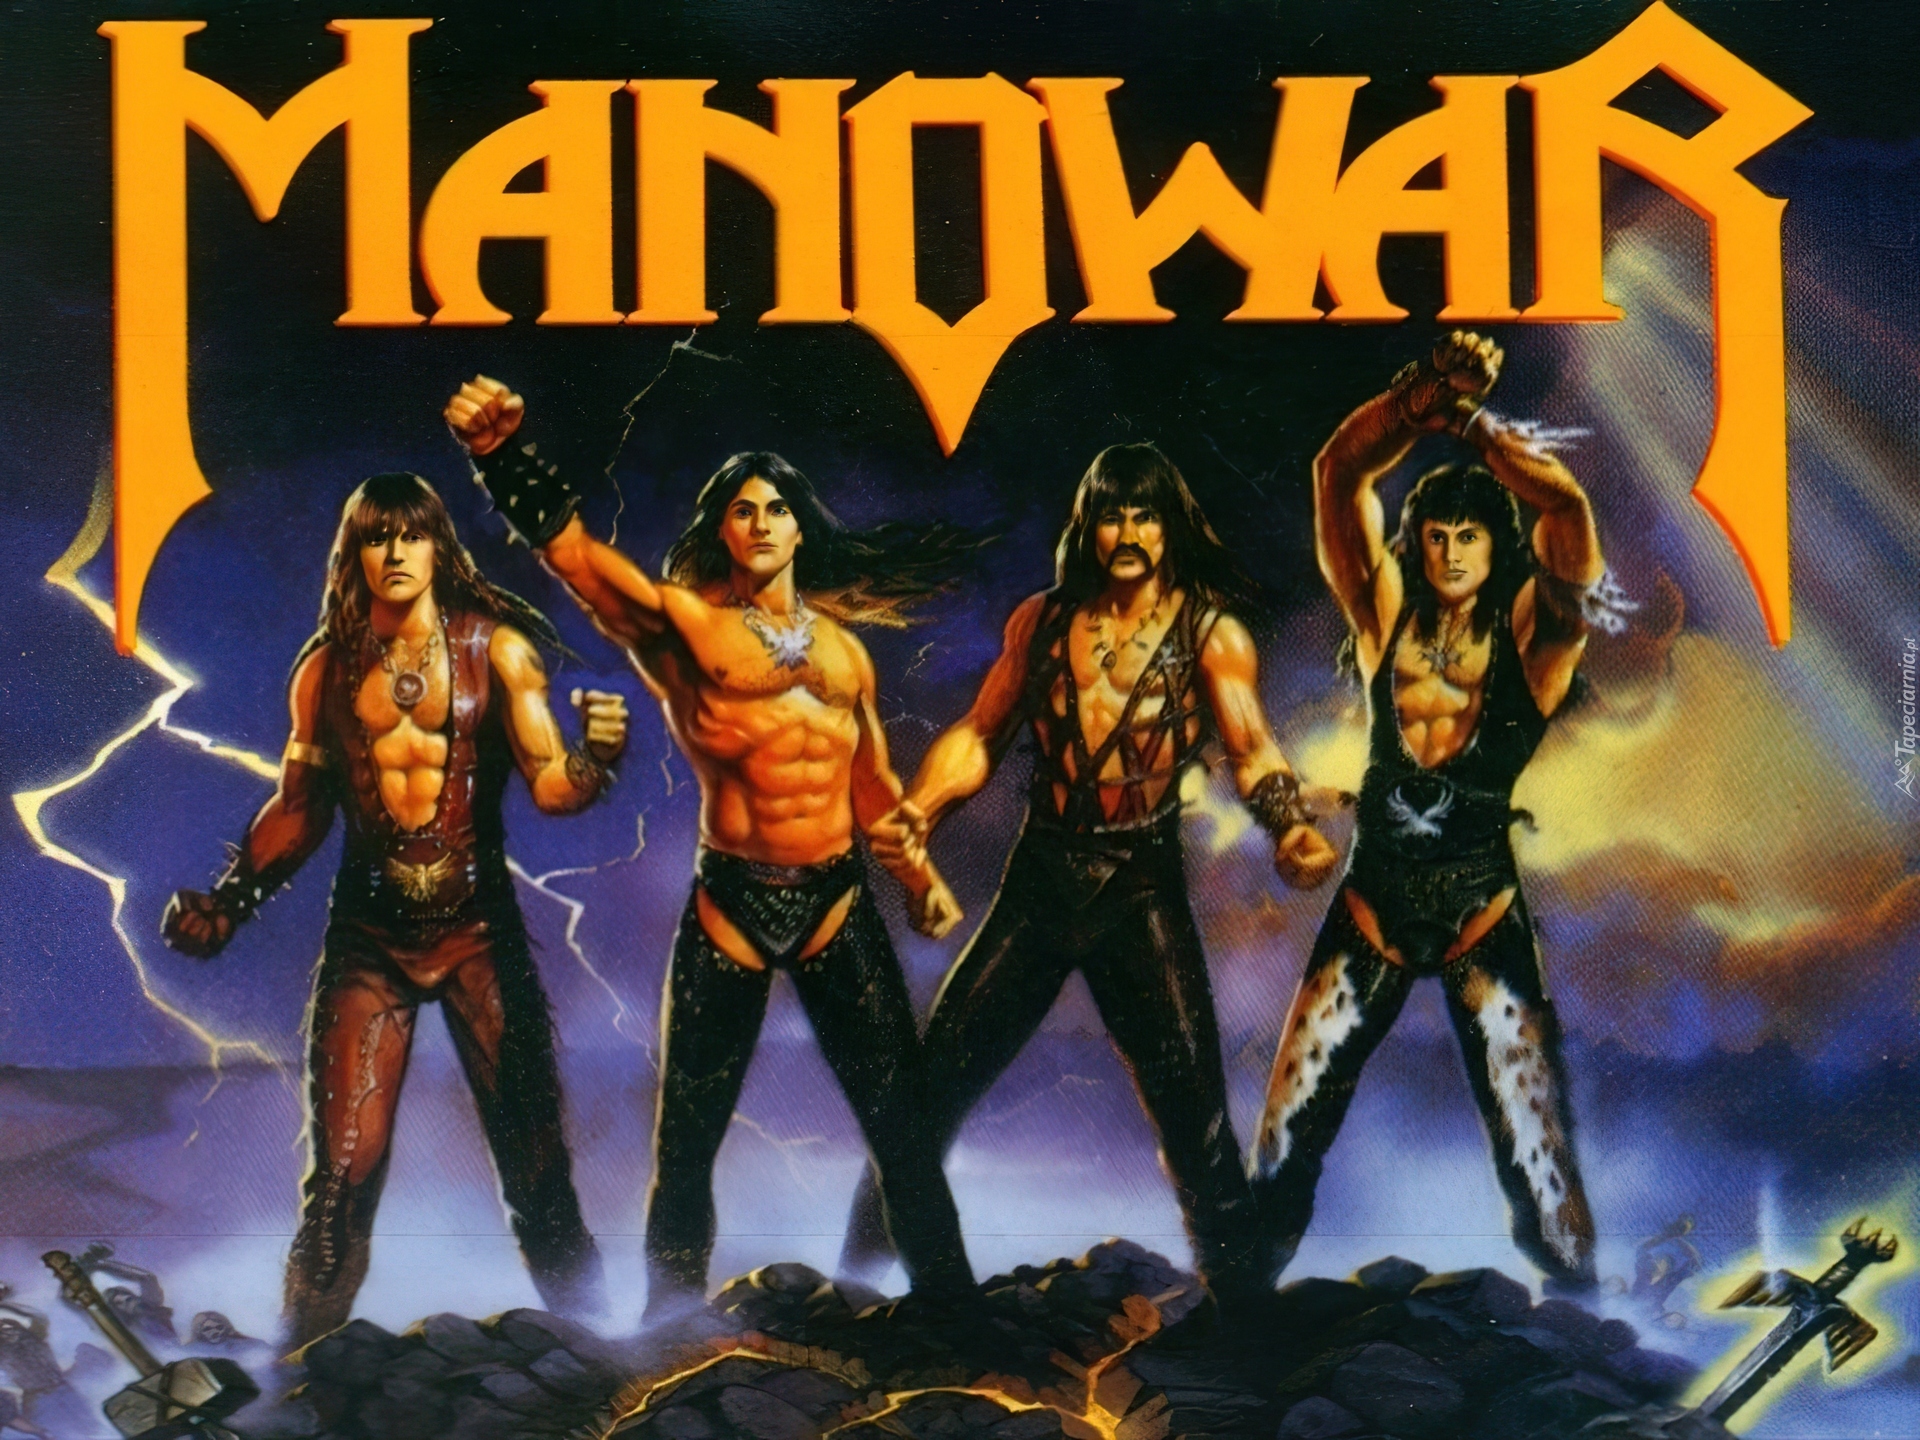 Manowar fight. Группа Manowar 2021. Группа Manowar иллюстрации. Manowar постеры. Группа Manowar обложки.